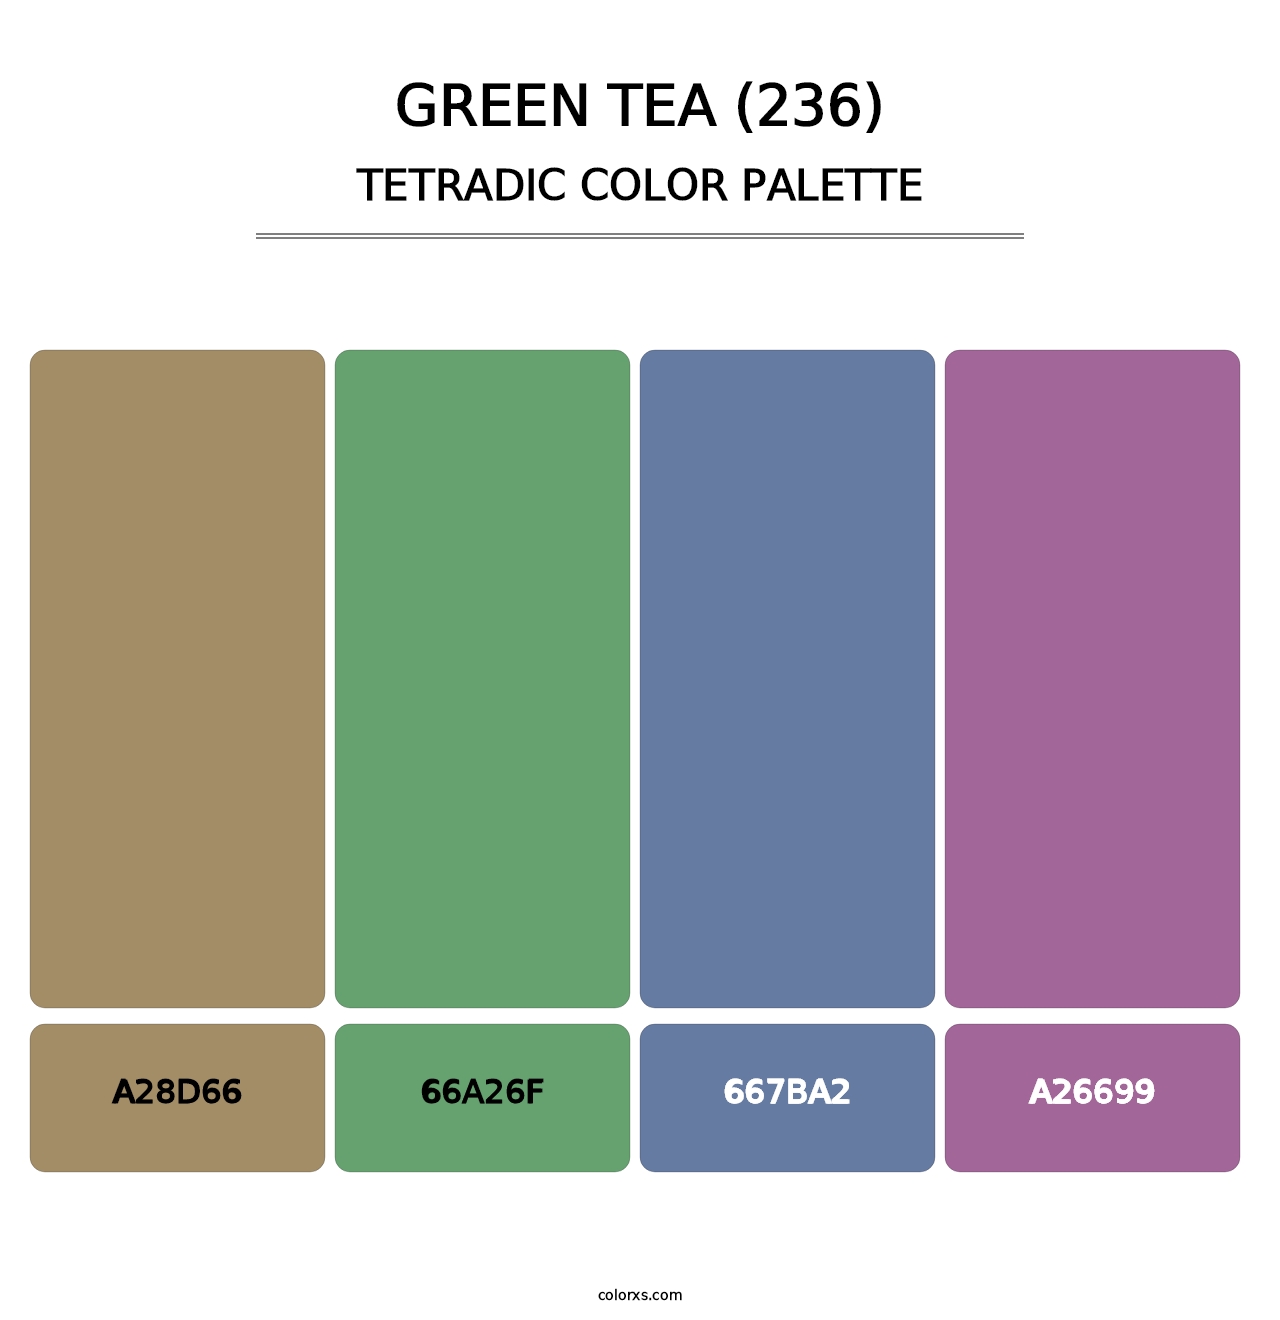 Green Tea (236) - Tetradic Color Palette